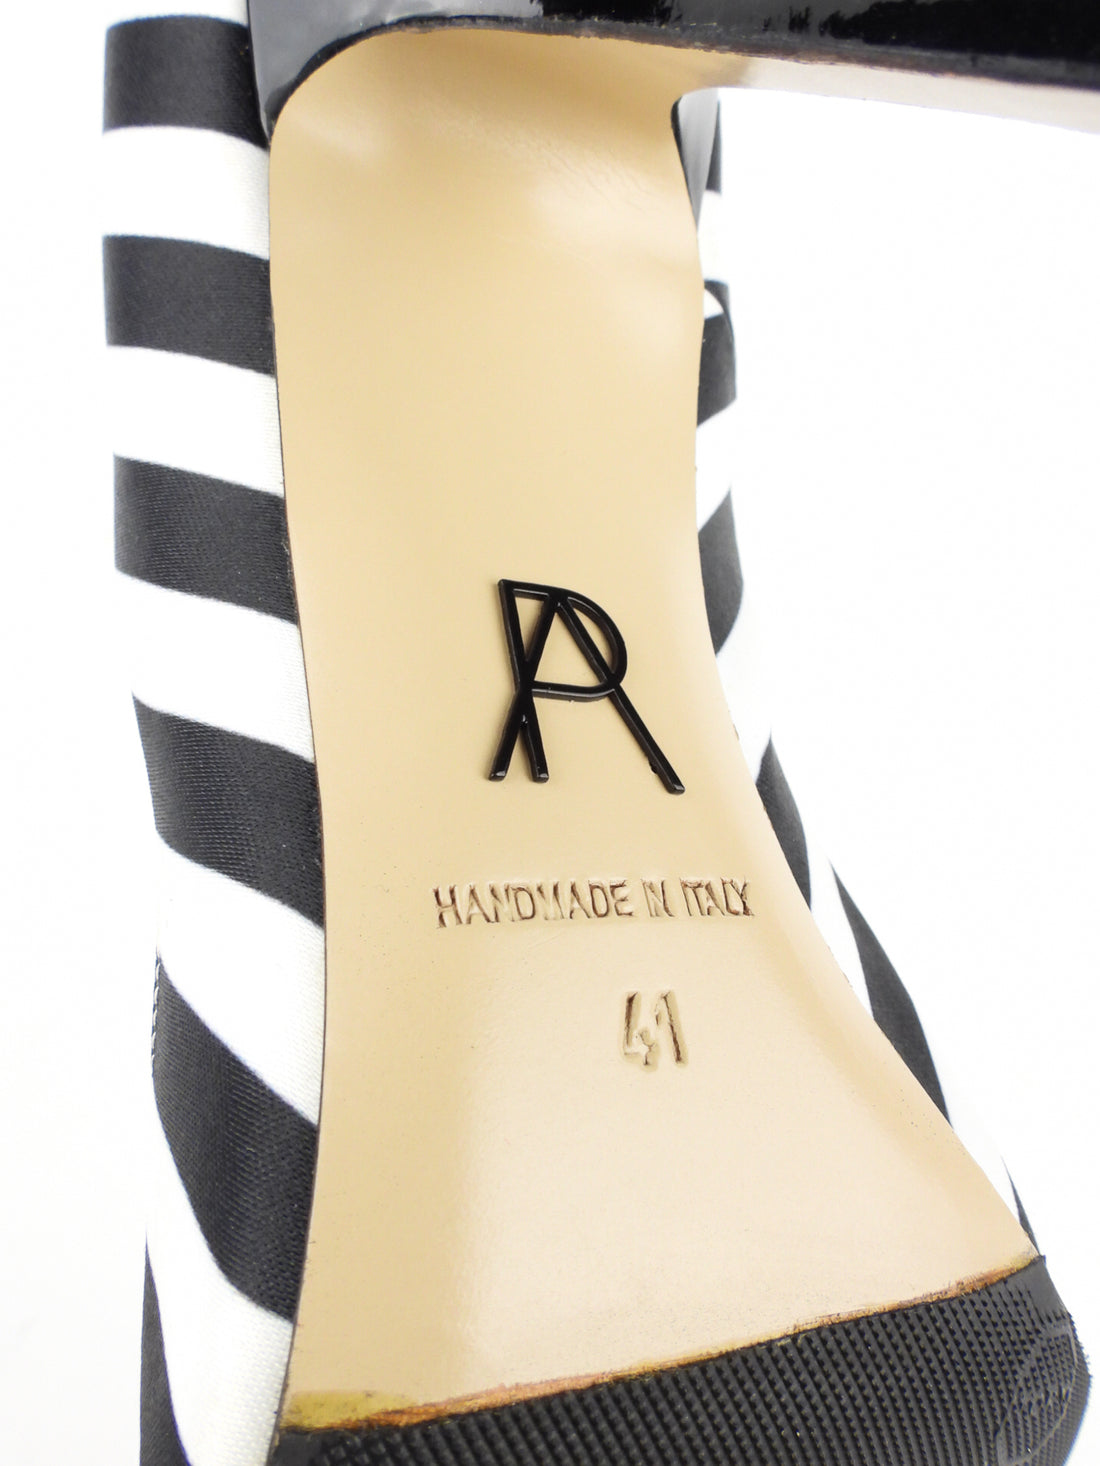 Paul Andrew Black and White Striped Satin Stiletto Heel Pumps - 41